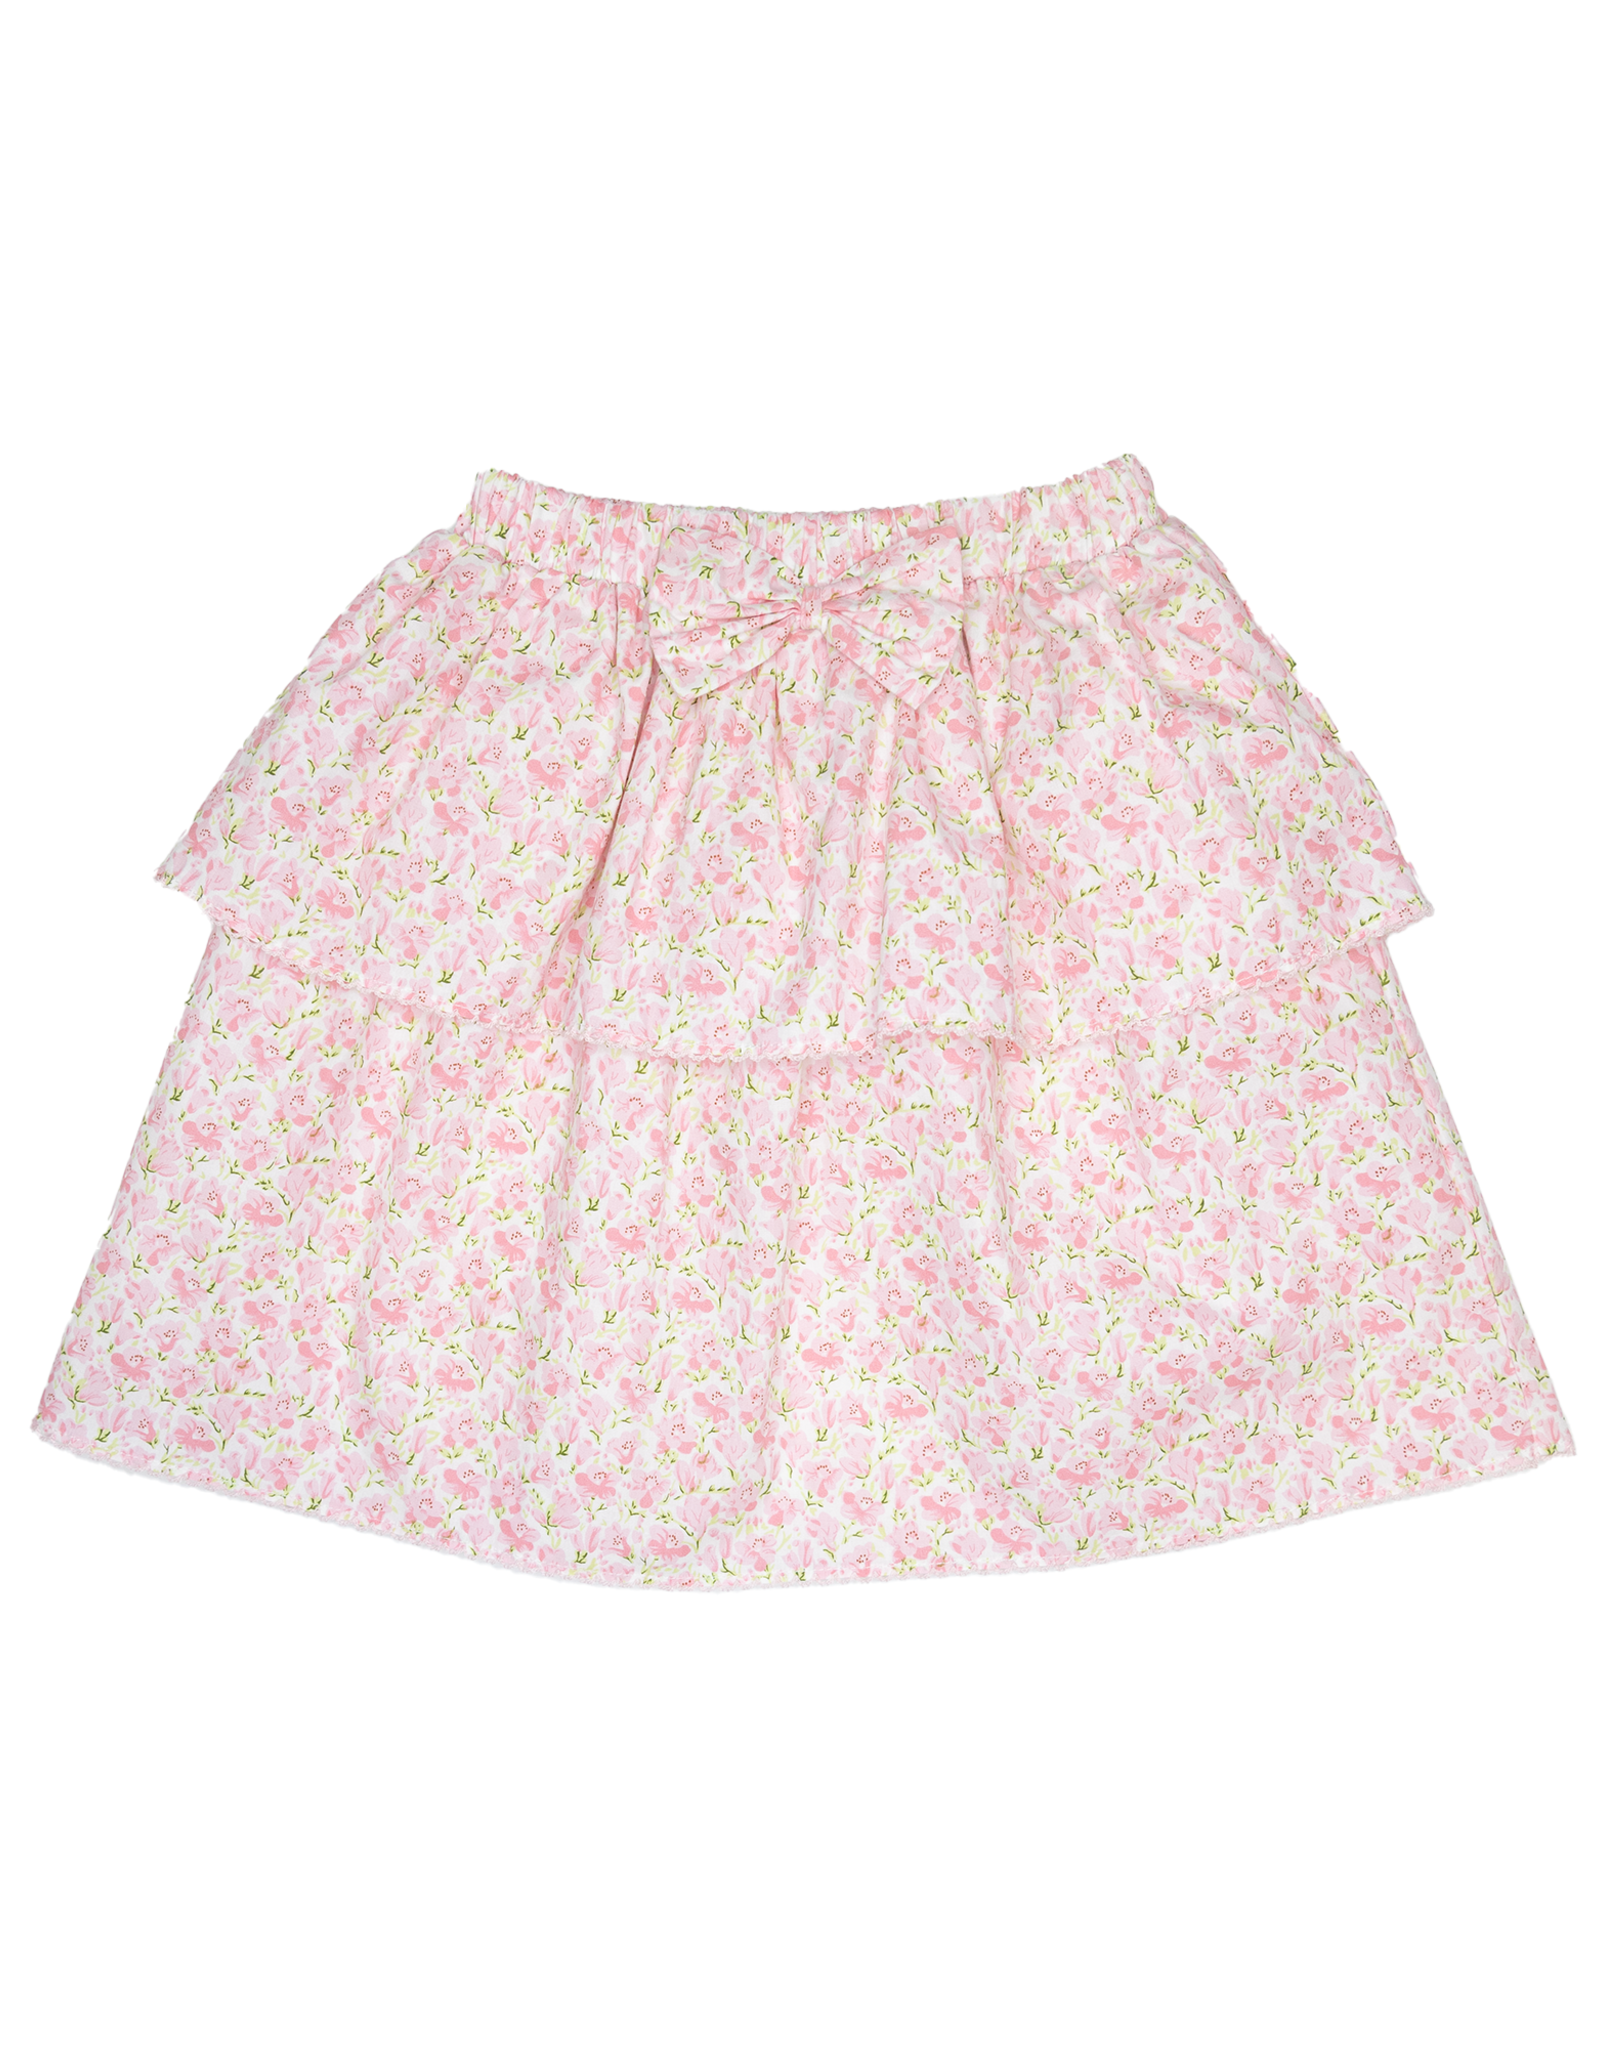 Delaney 82 Pink Floral Skirt with Blouse Set